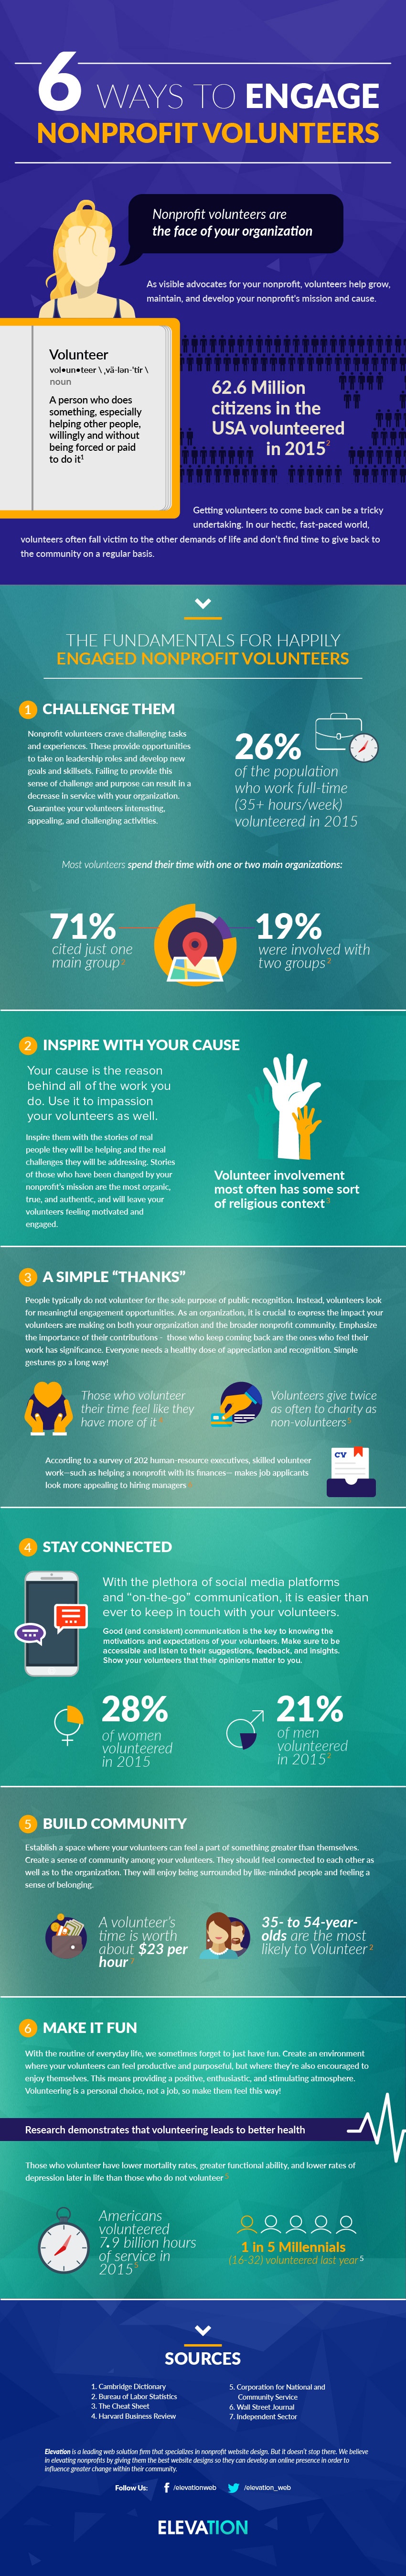 engage nonprofit volunteers infographic